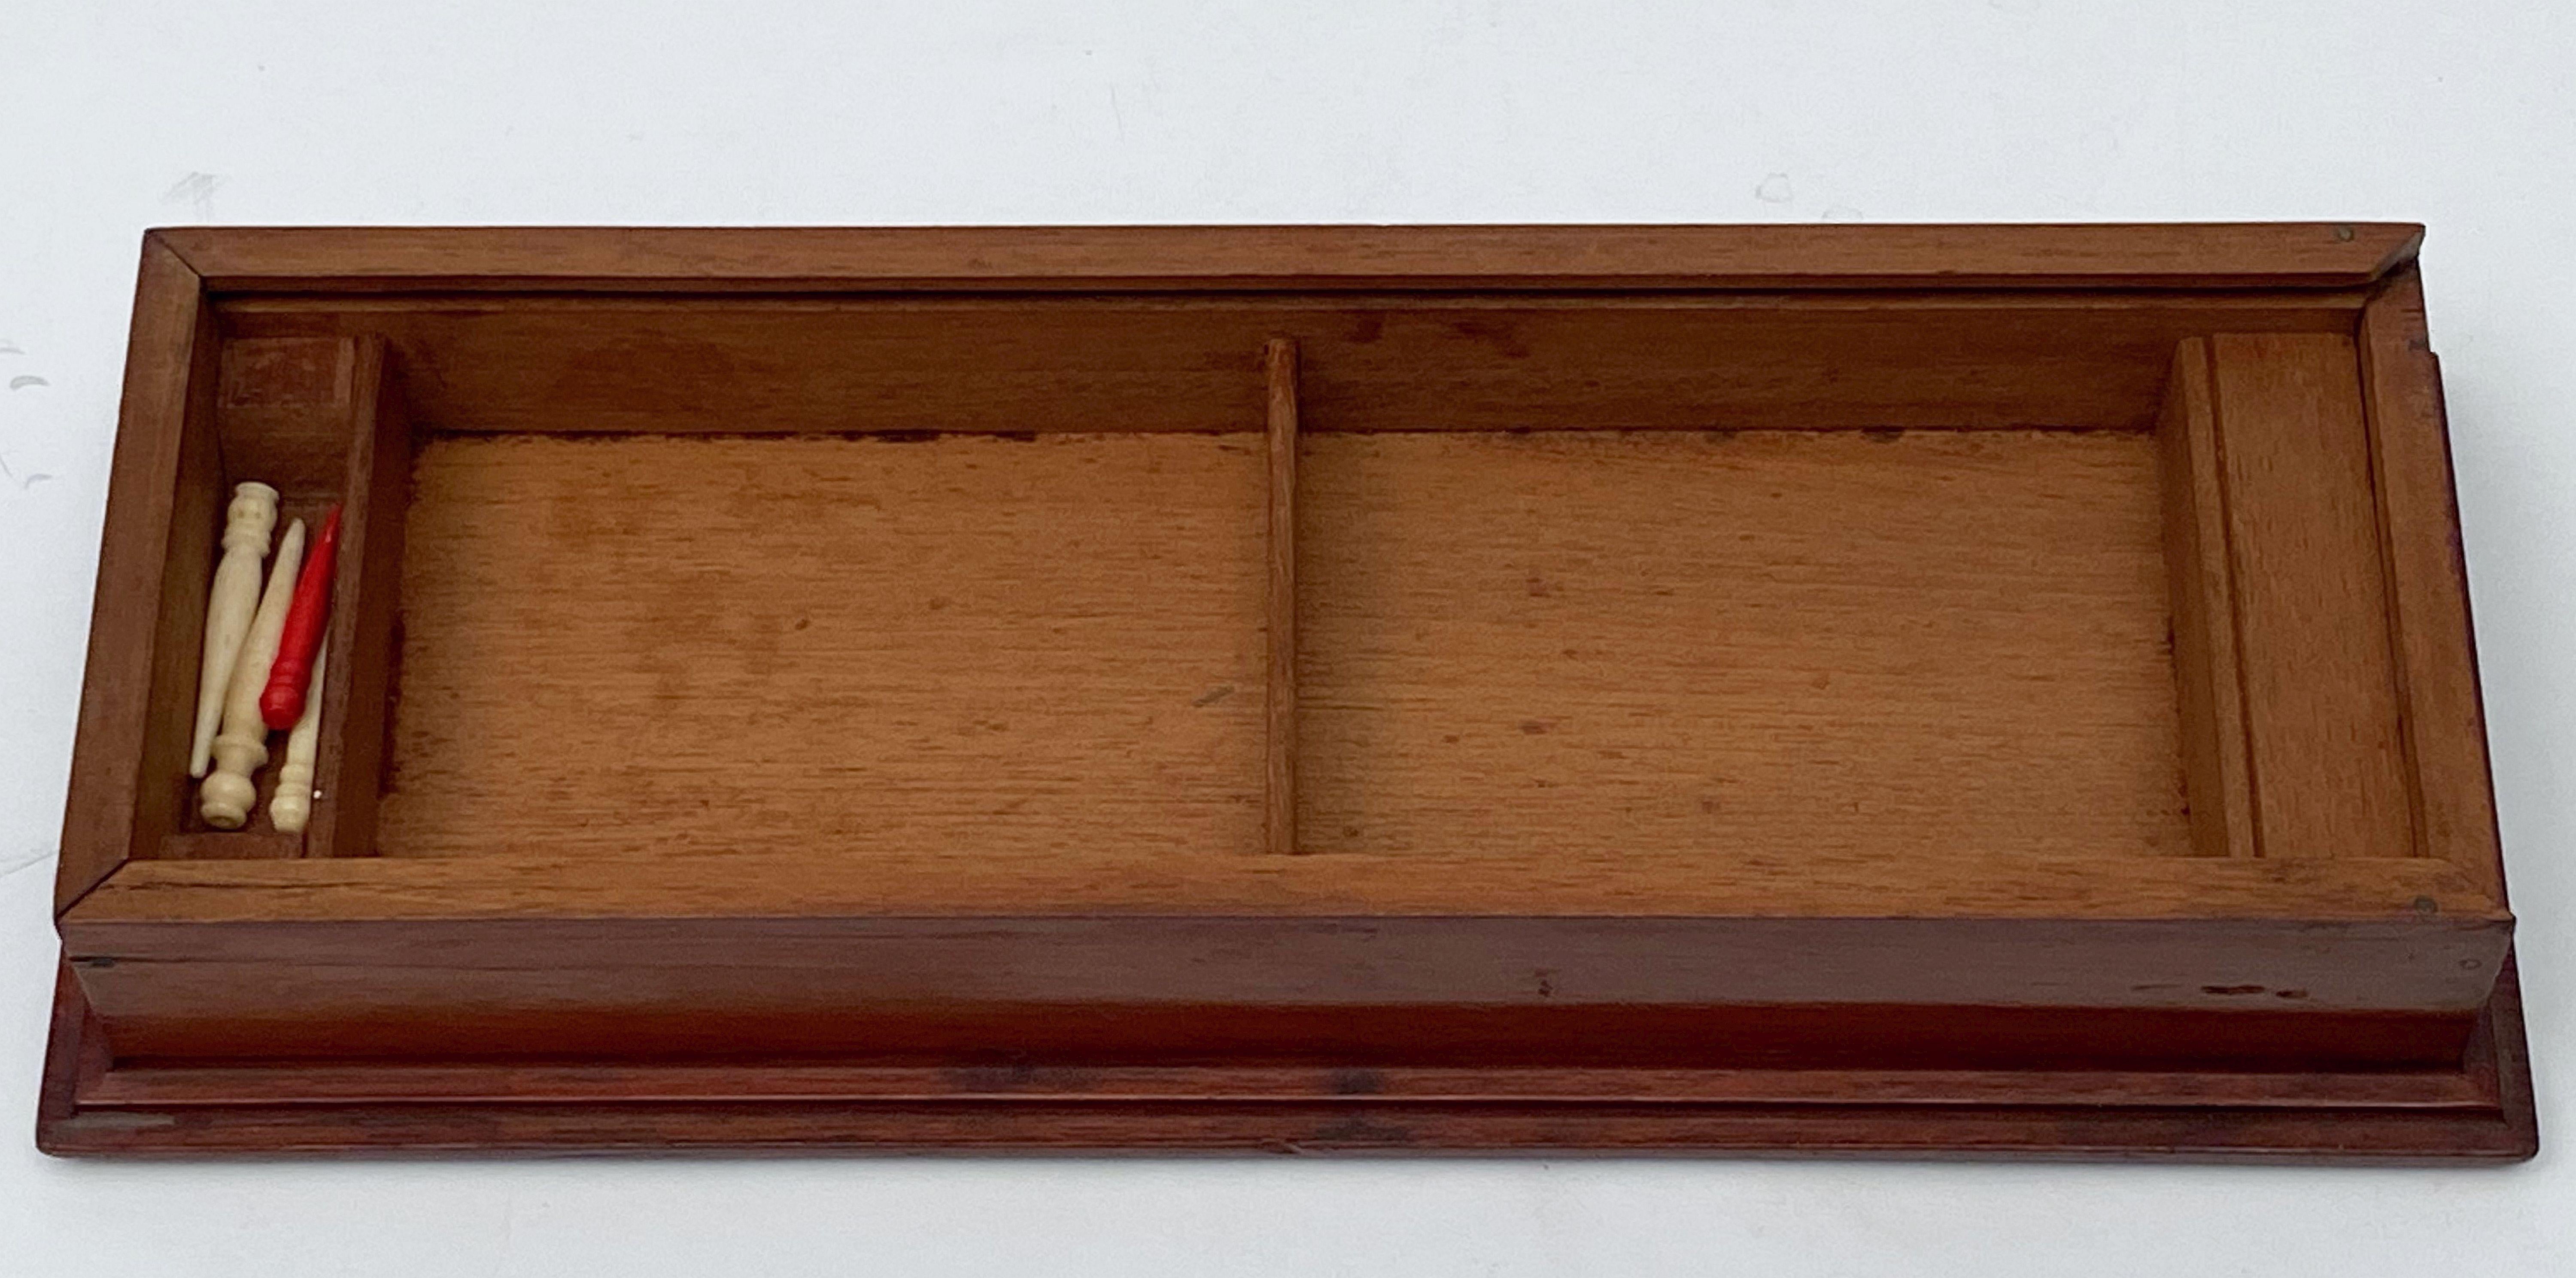 19th Century English Cribbage Board or Game Box of Inlaid Mahogany